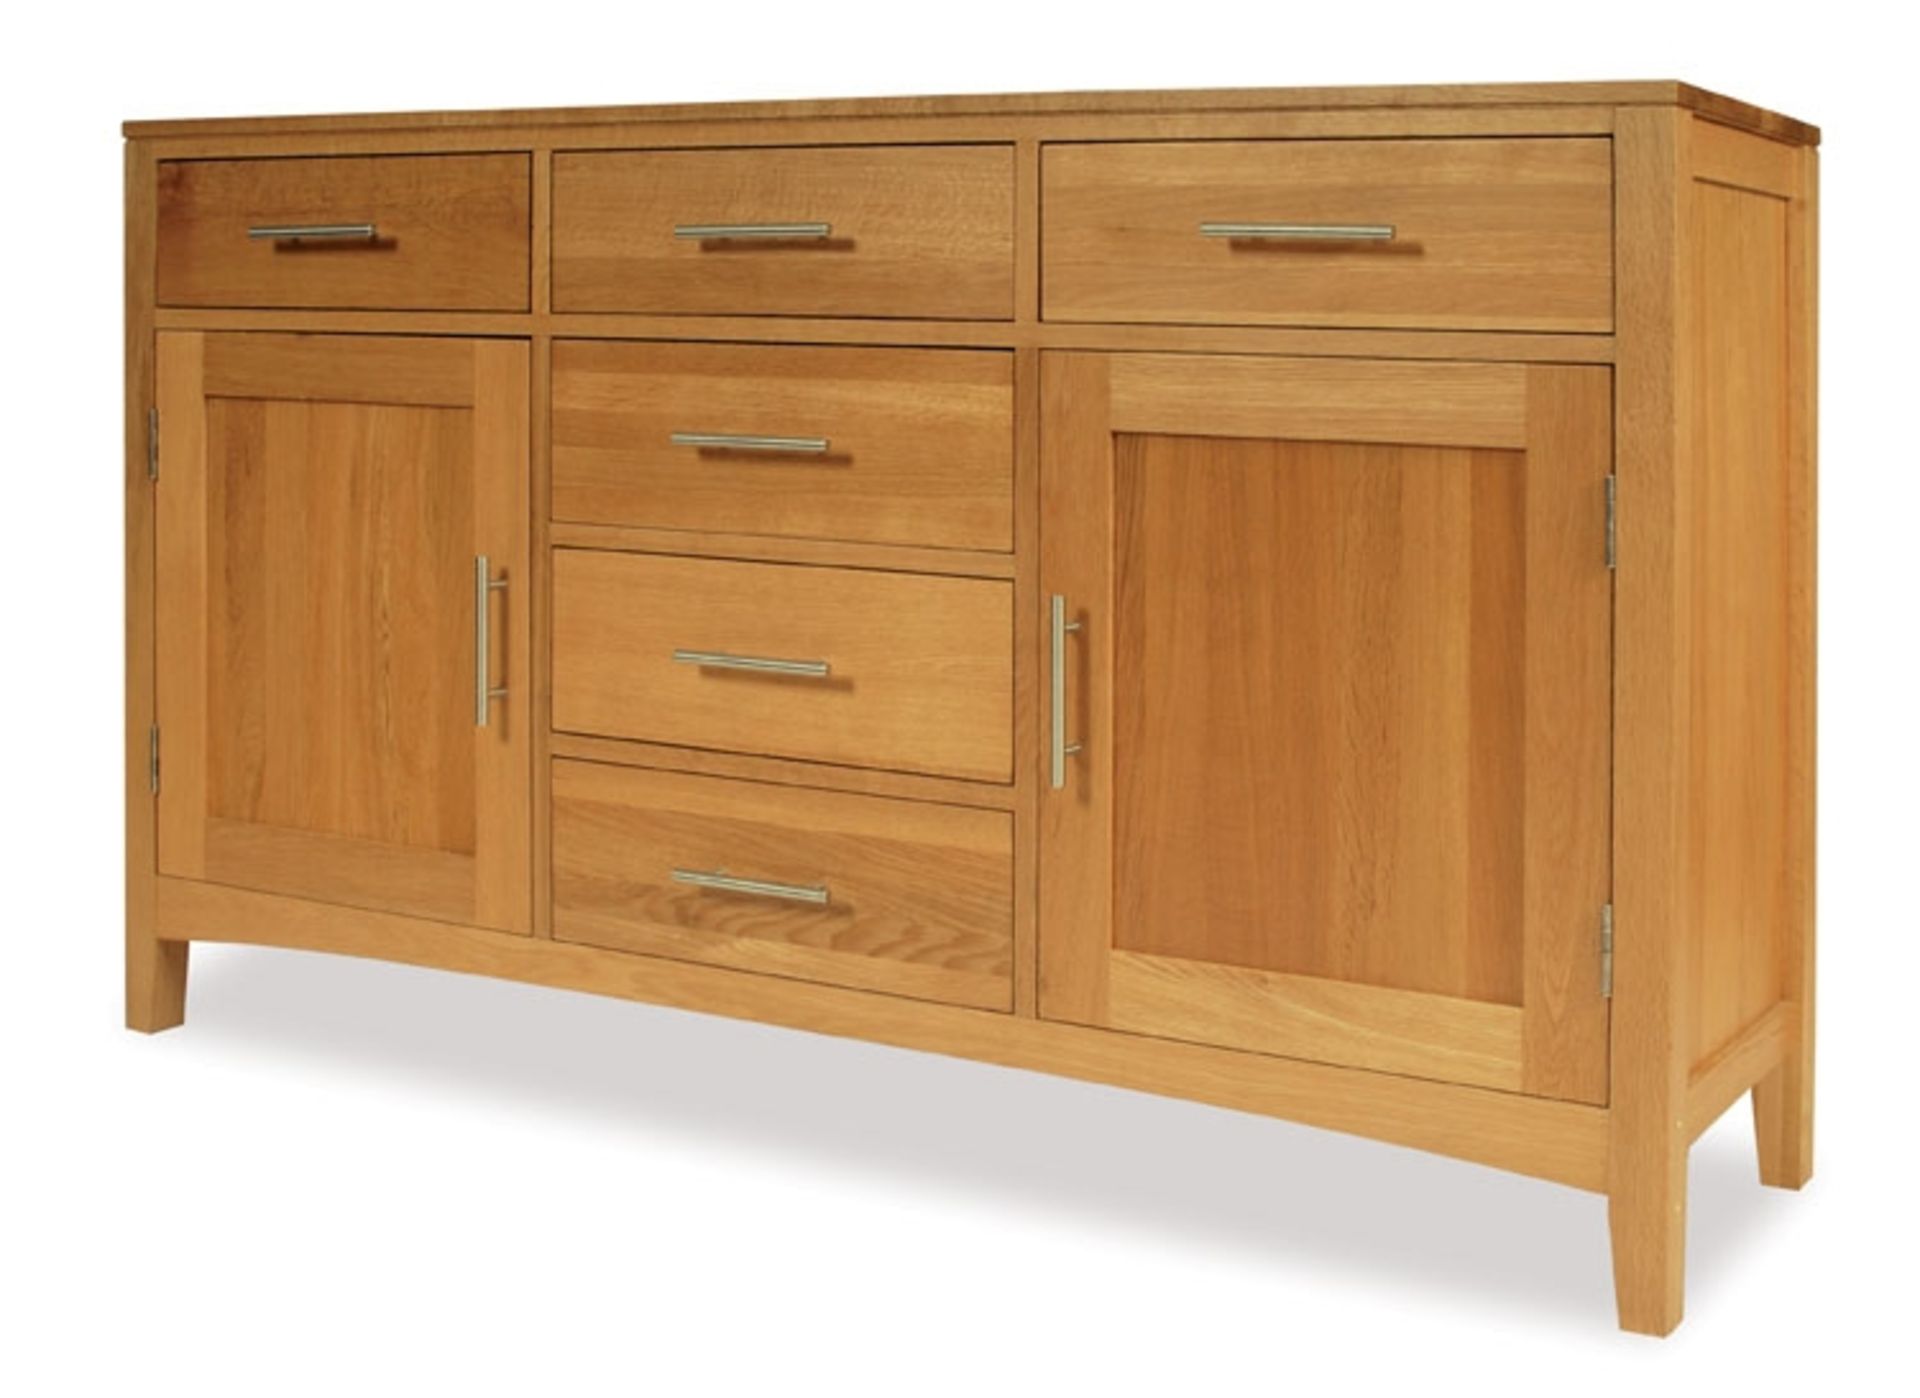 1x Hereford Oak 2 Door 6 Drawer Sideboard - Full Dresser